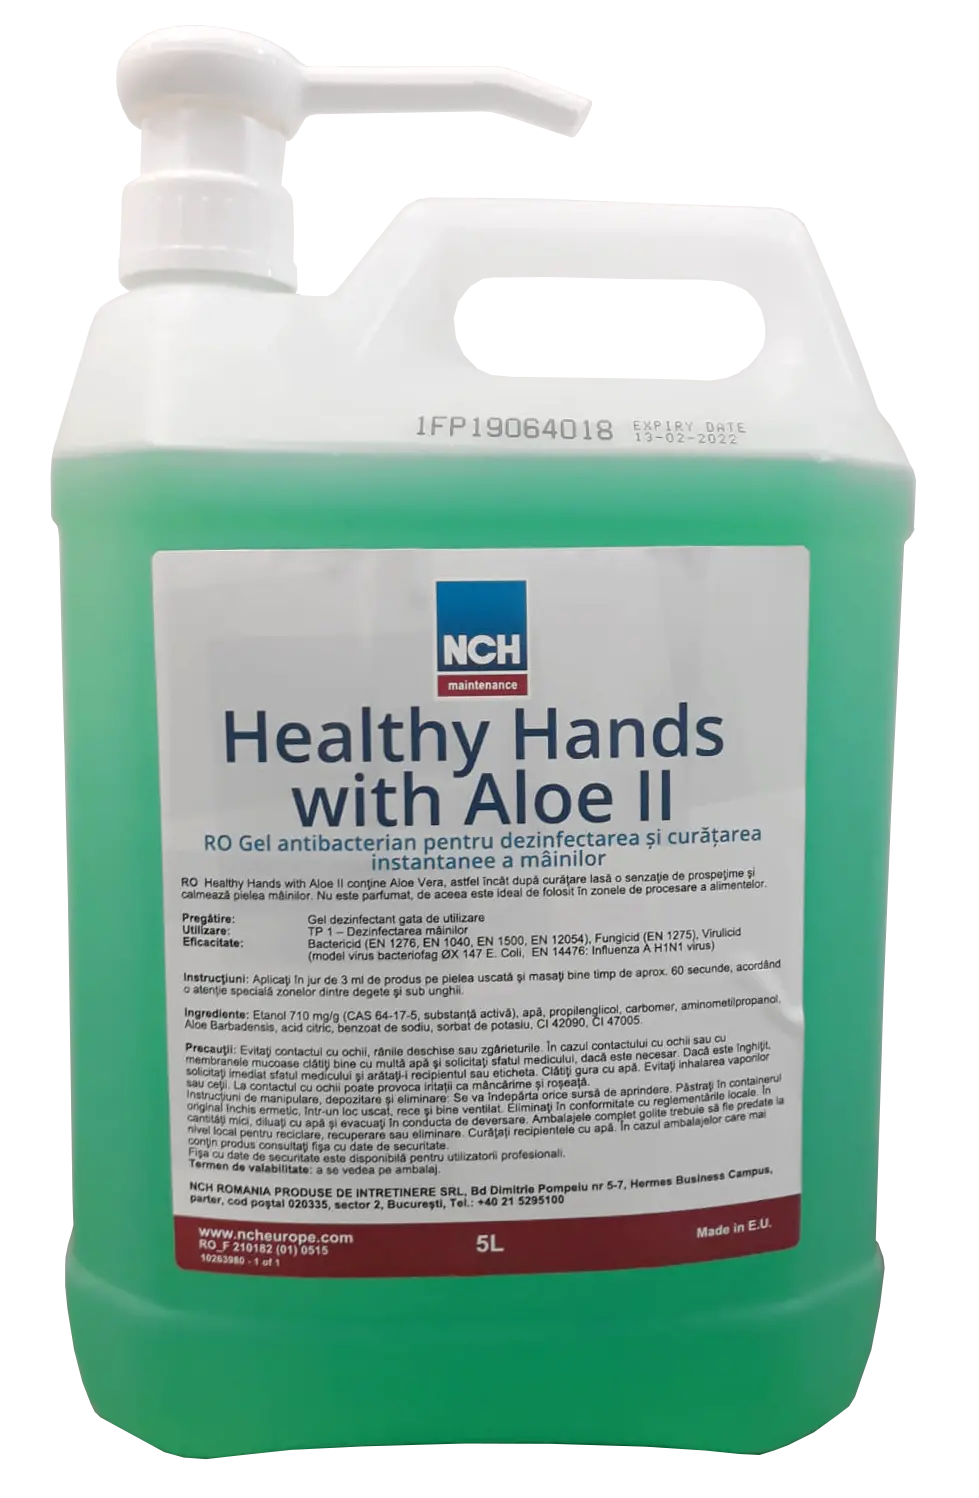 Healthy Hands II with Aloe